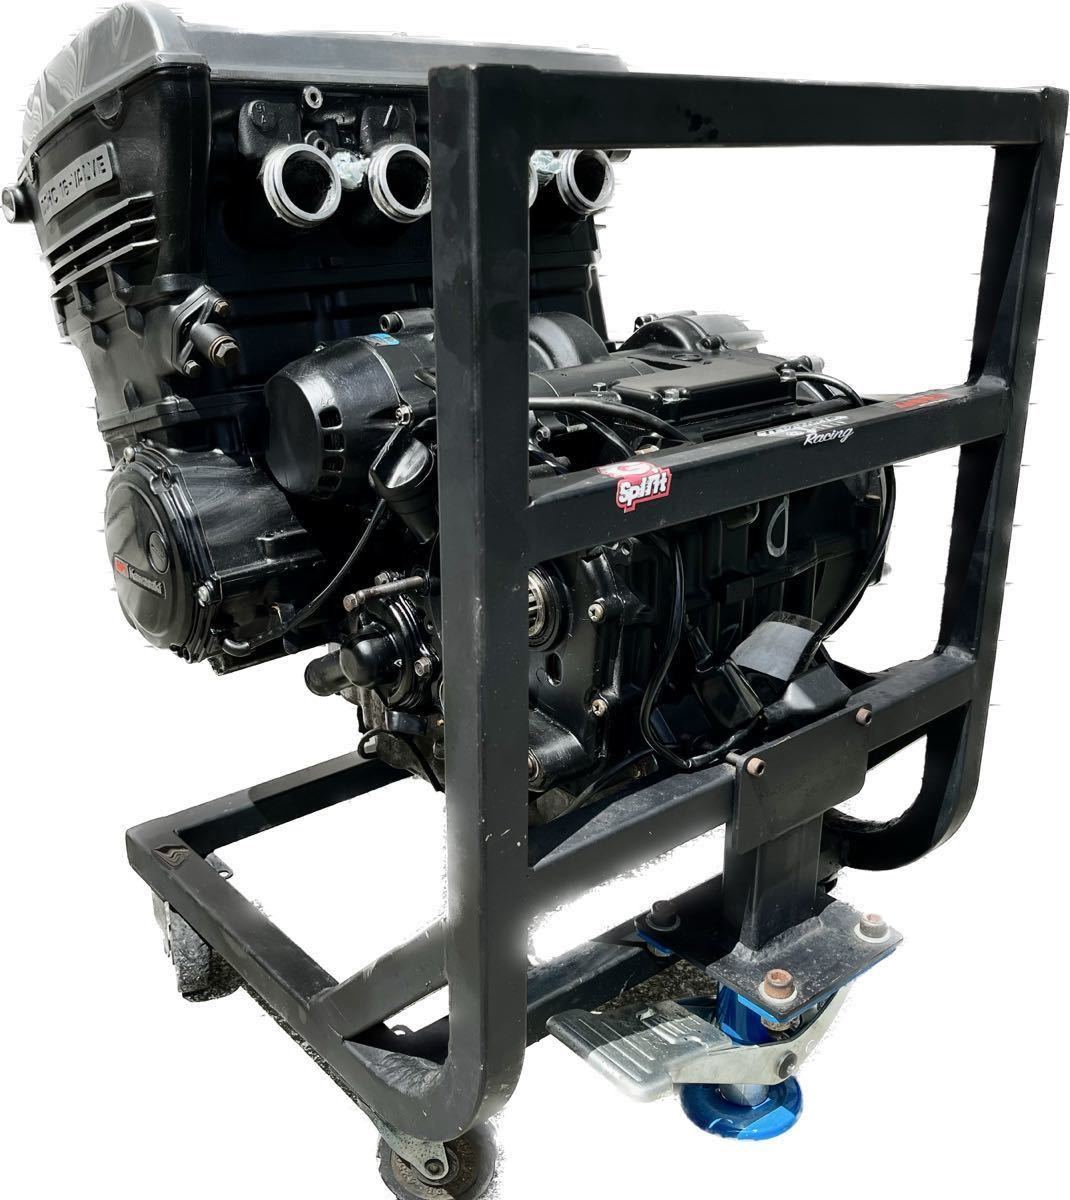 GPZ900R A8 actual work engine Yoshimura ST-1 high cam superior article mileage 17,874 kilo 